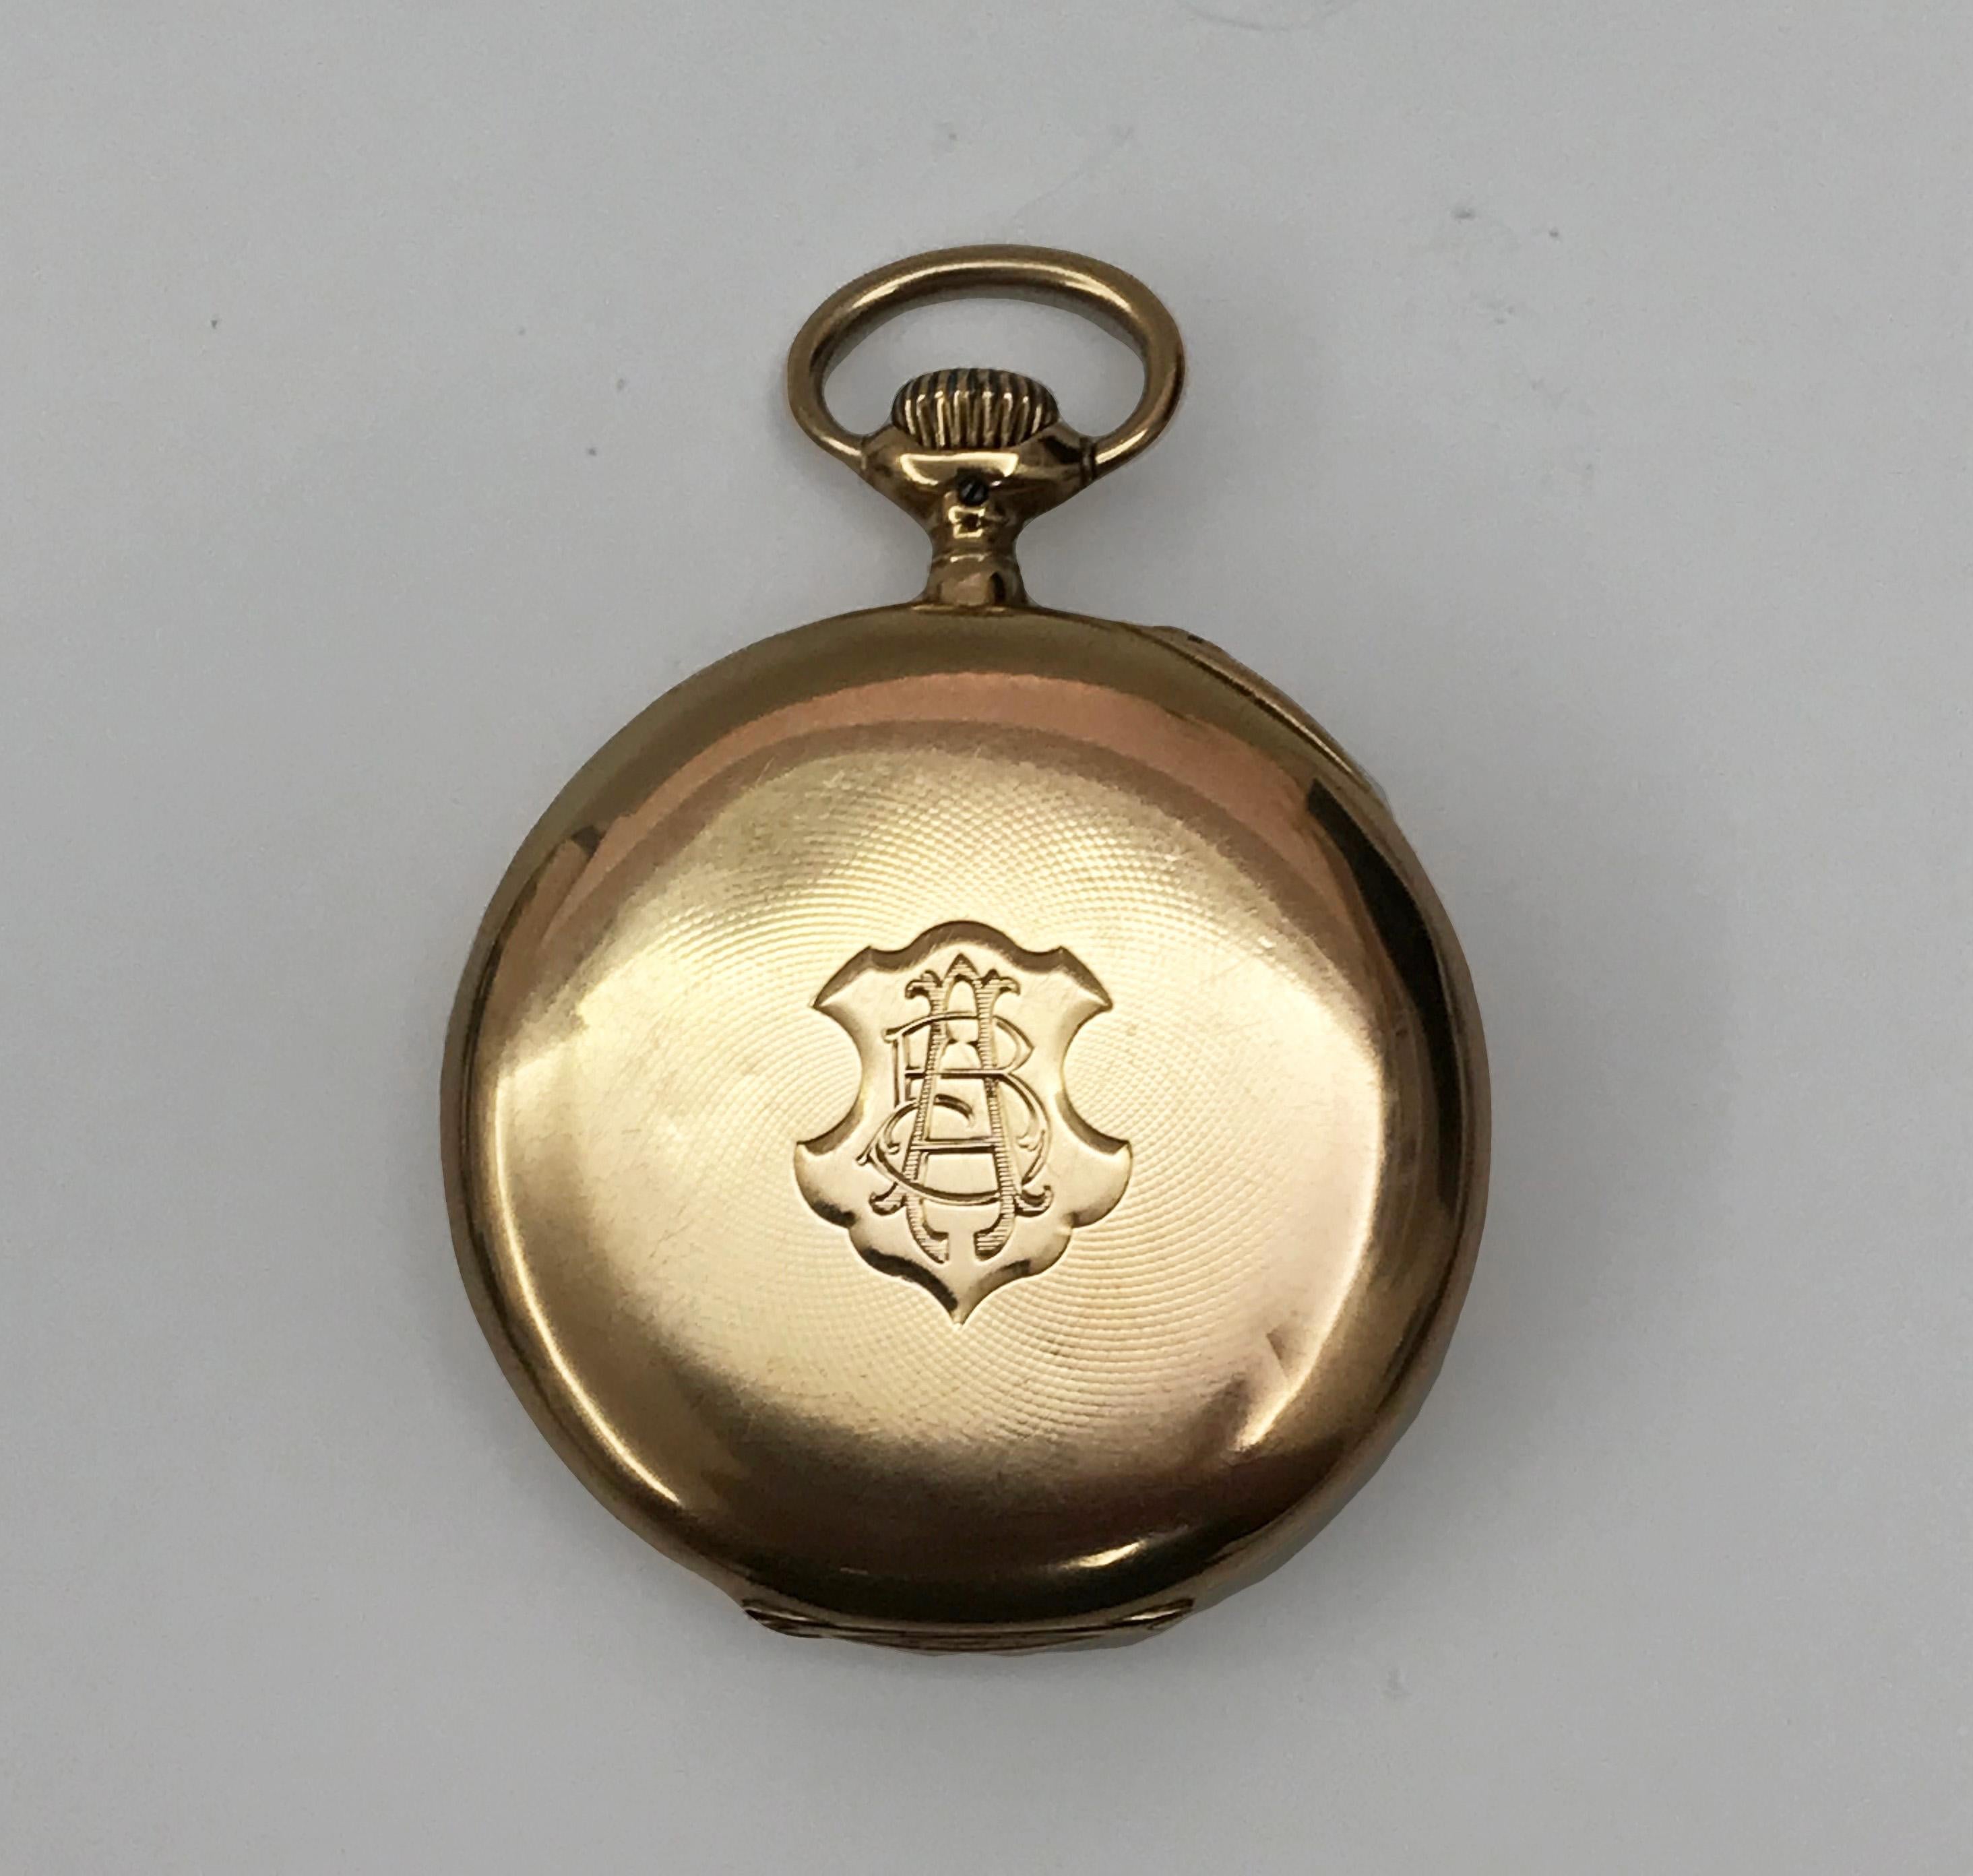  IWC International Watch & Co pocket watch in 18 karat gold. 1910s Swiss Made 4